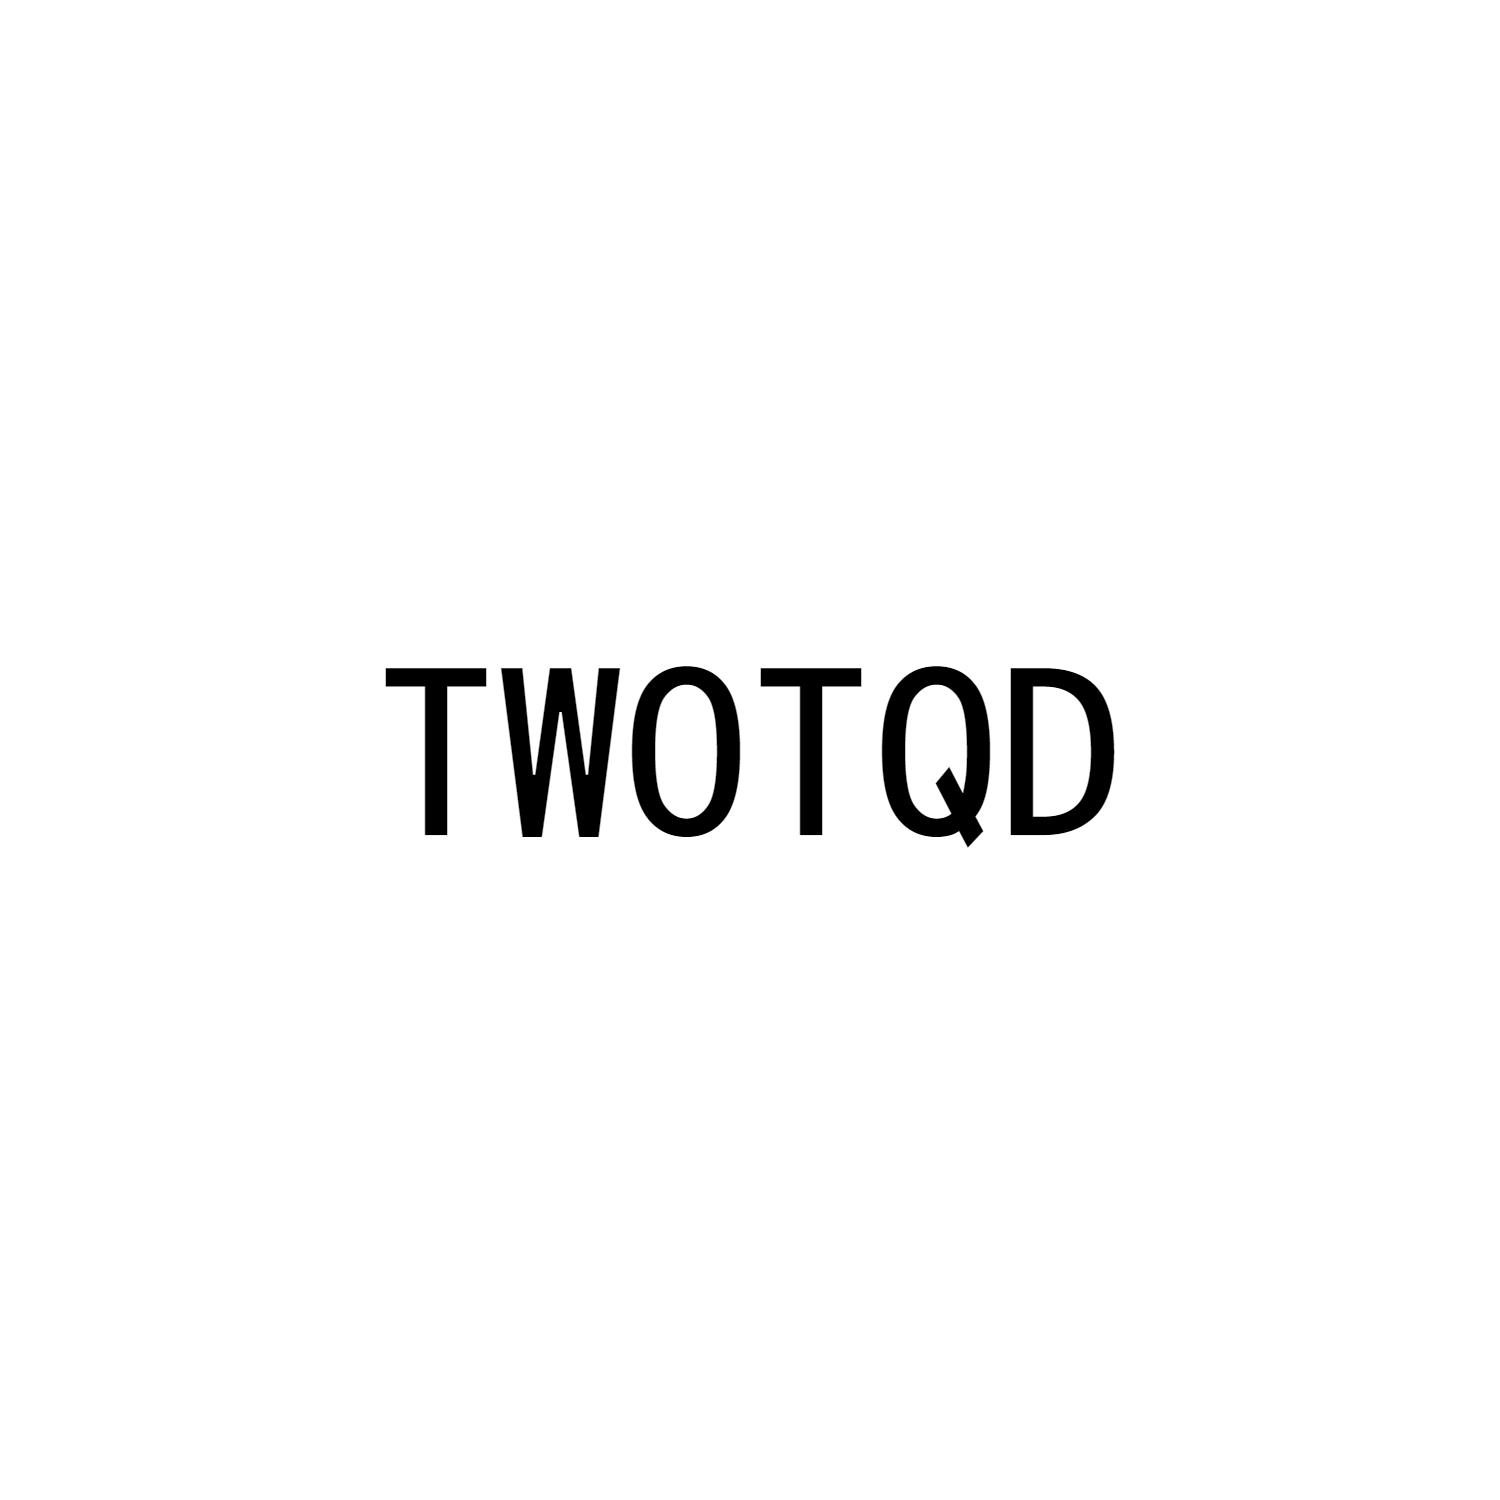 TWOTQD